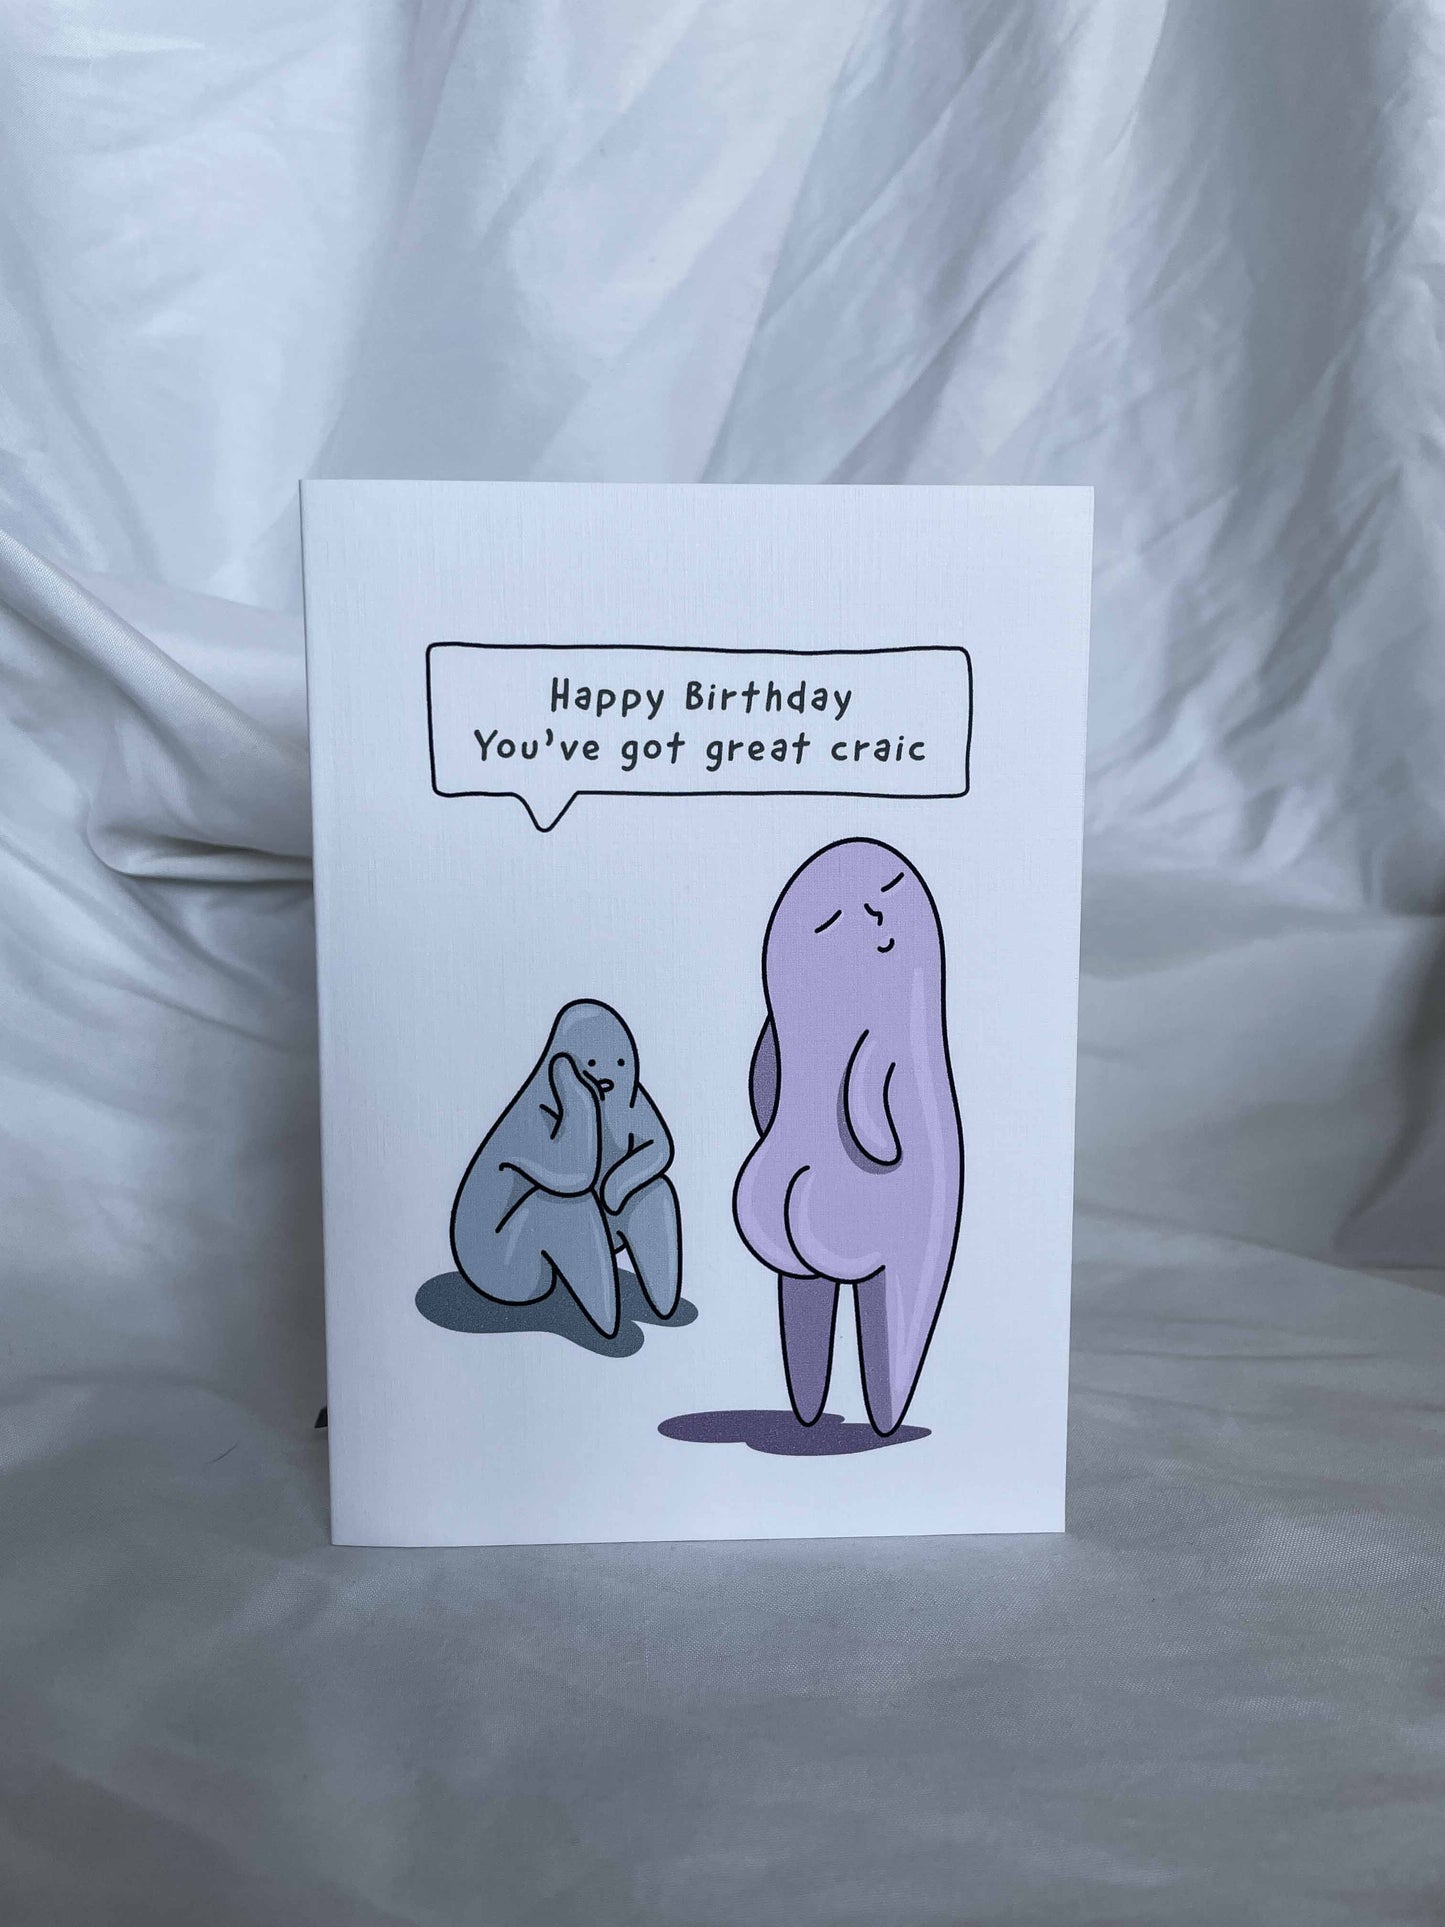 Nice ass butt crack bum (craic) happy birthday card